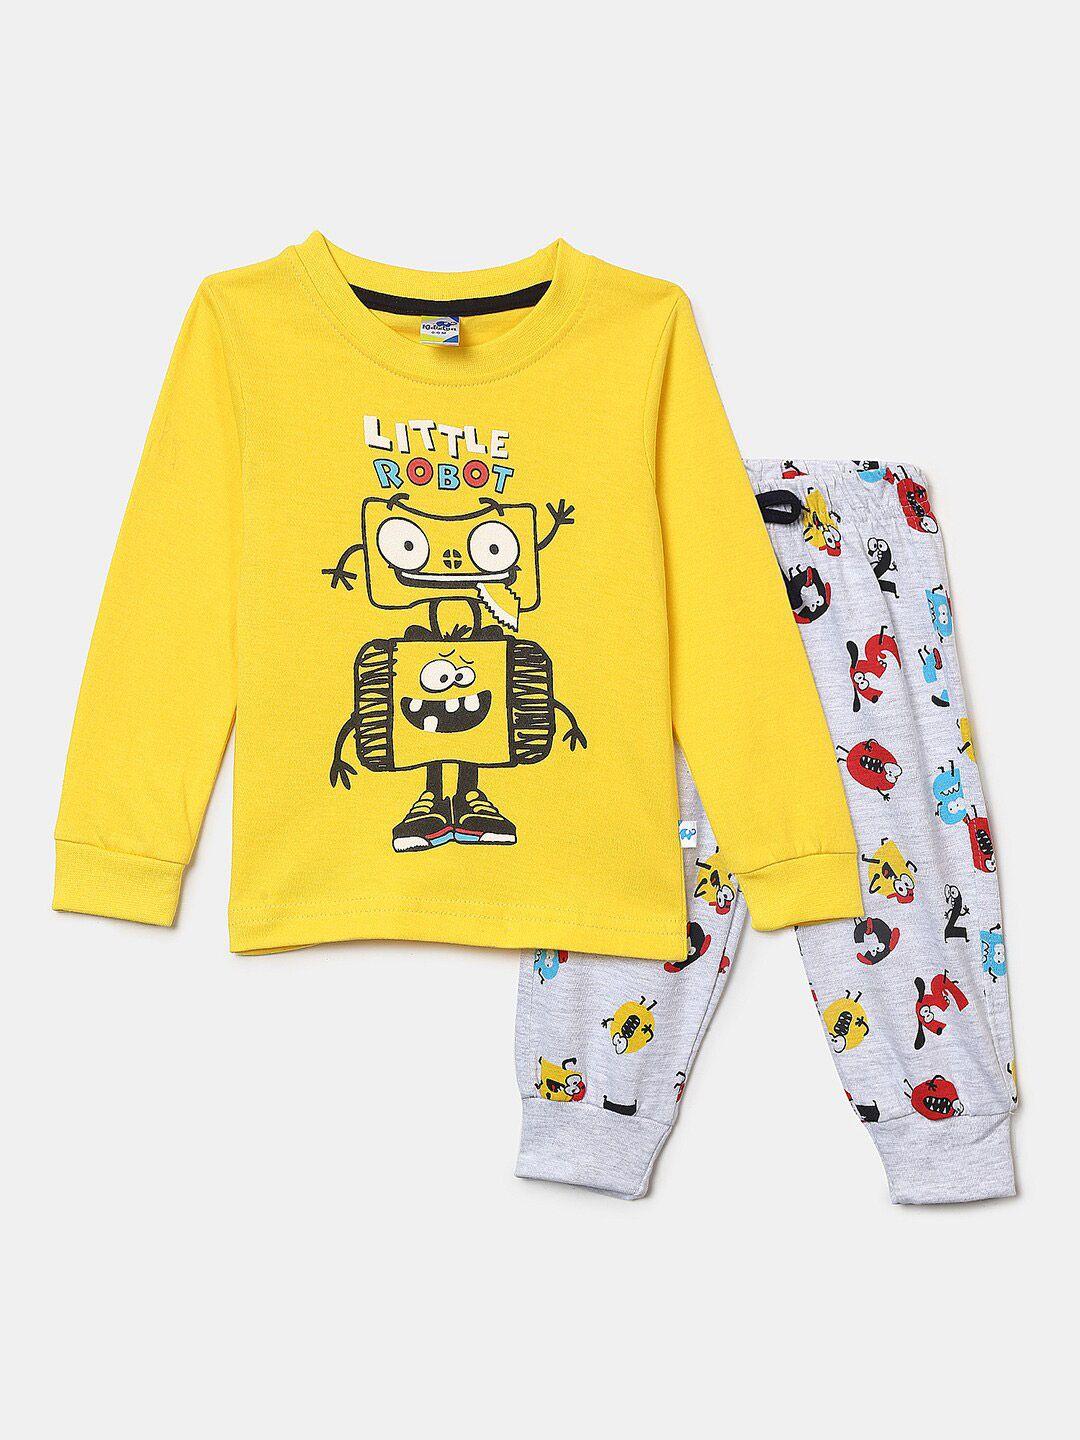 v-mart unisex kids yellow & grey pure cotton printed top with pyjamas